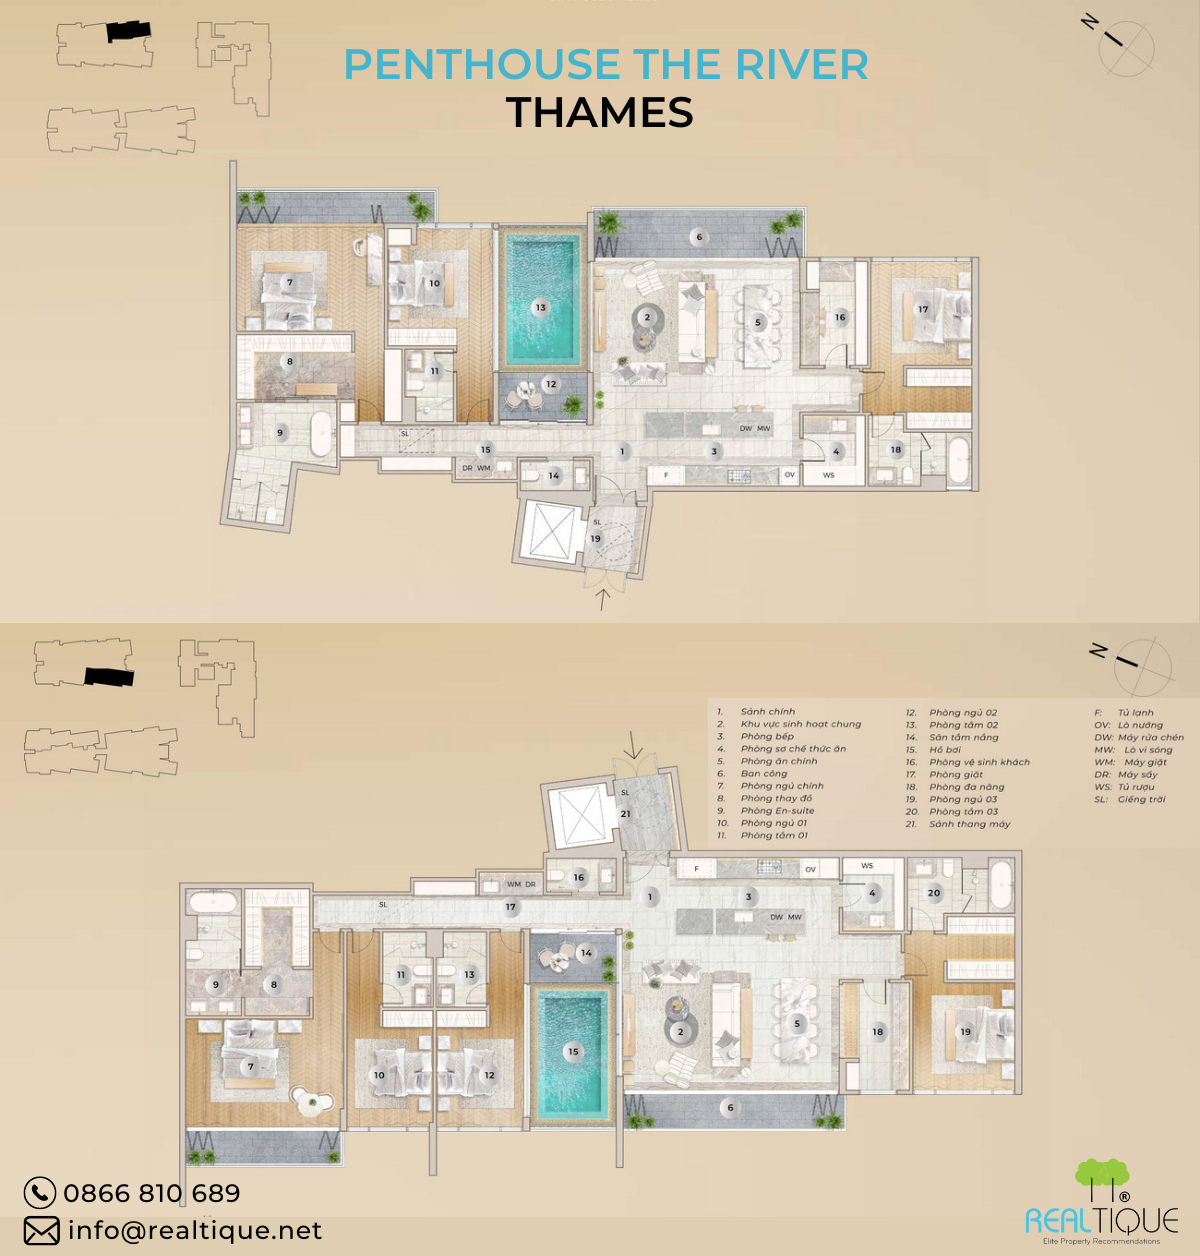 Penthouse The River Thames Floor Plan